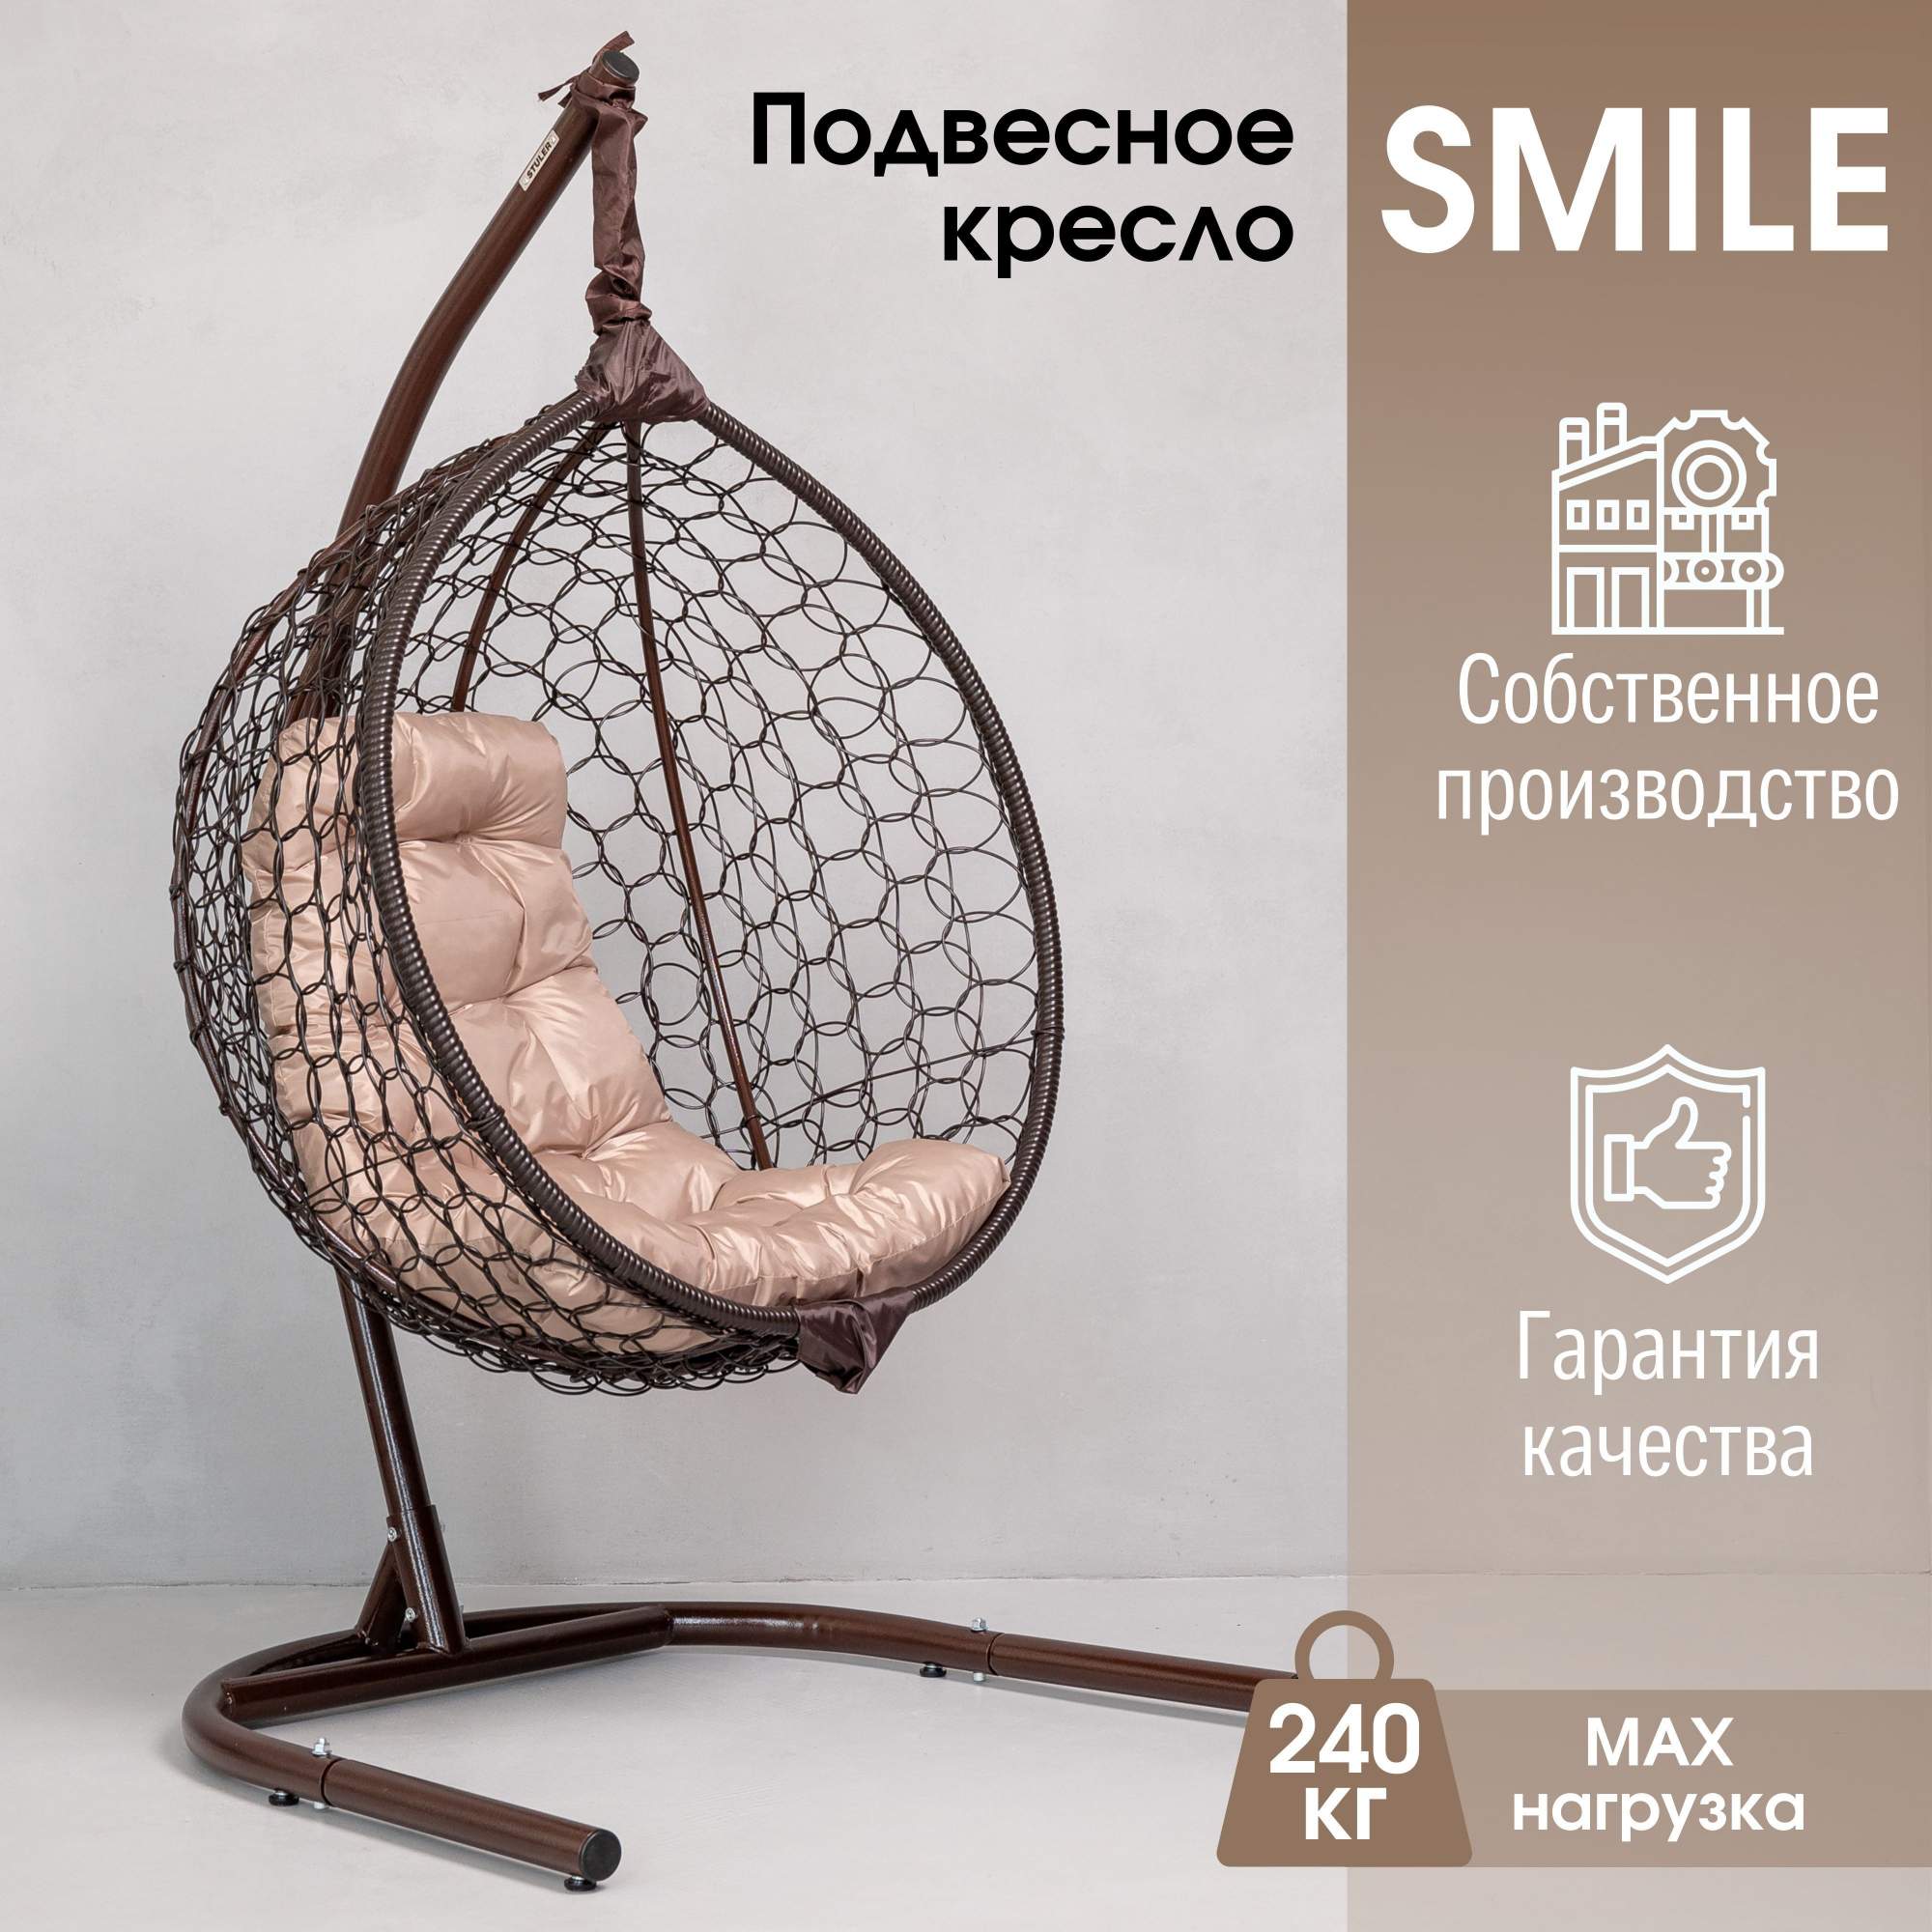 Подвесное кресло коричневое Stuler Smail ажур Ksmar1ur1po01t бежевая подушка - характеристики и описание на Мегамаркет